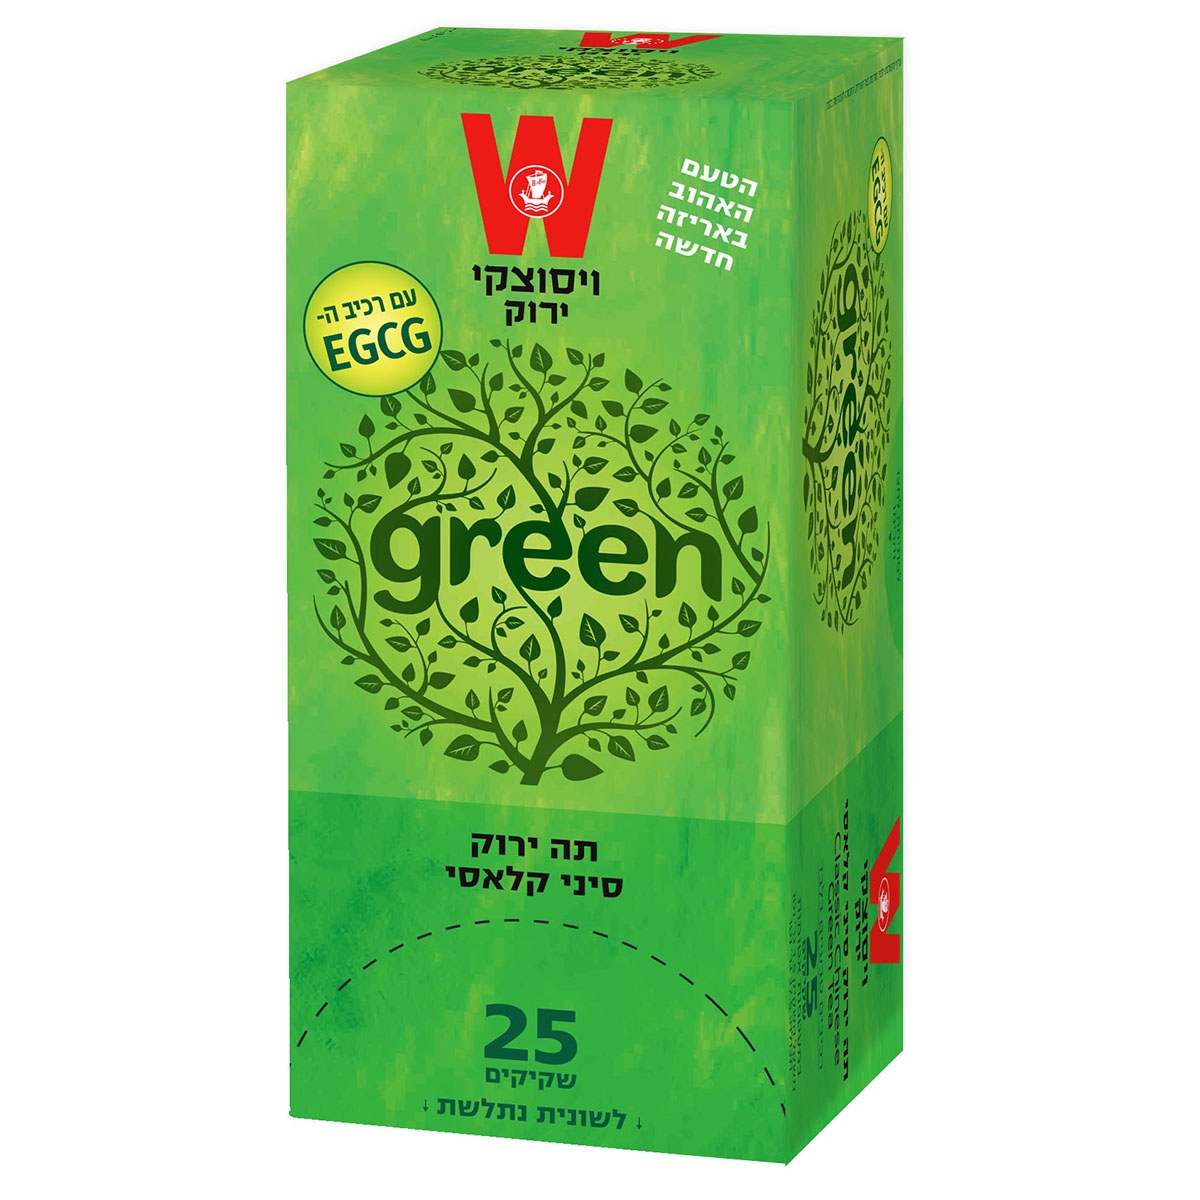 Wissotzky Green Tea. Classic Chinese Tea - 1